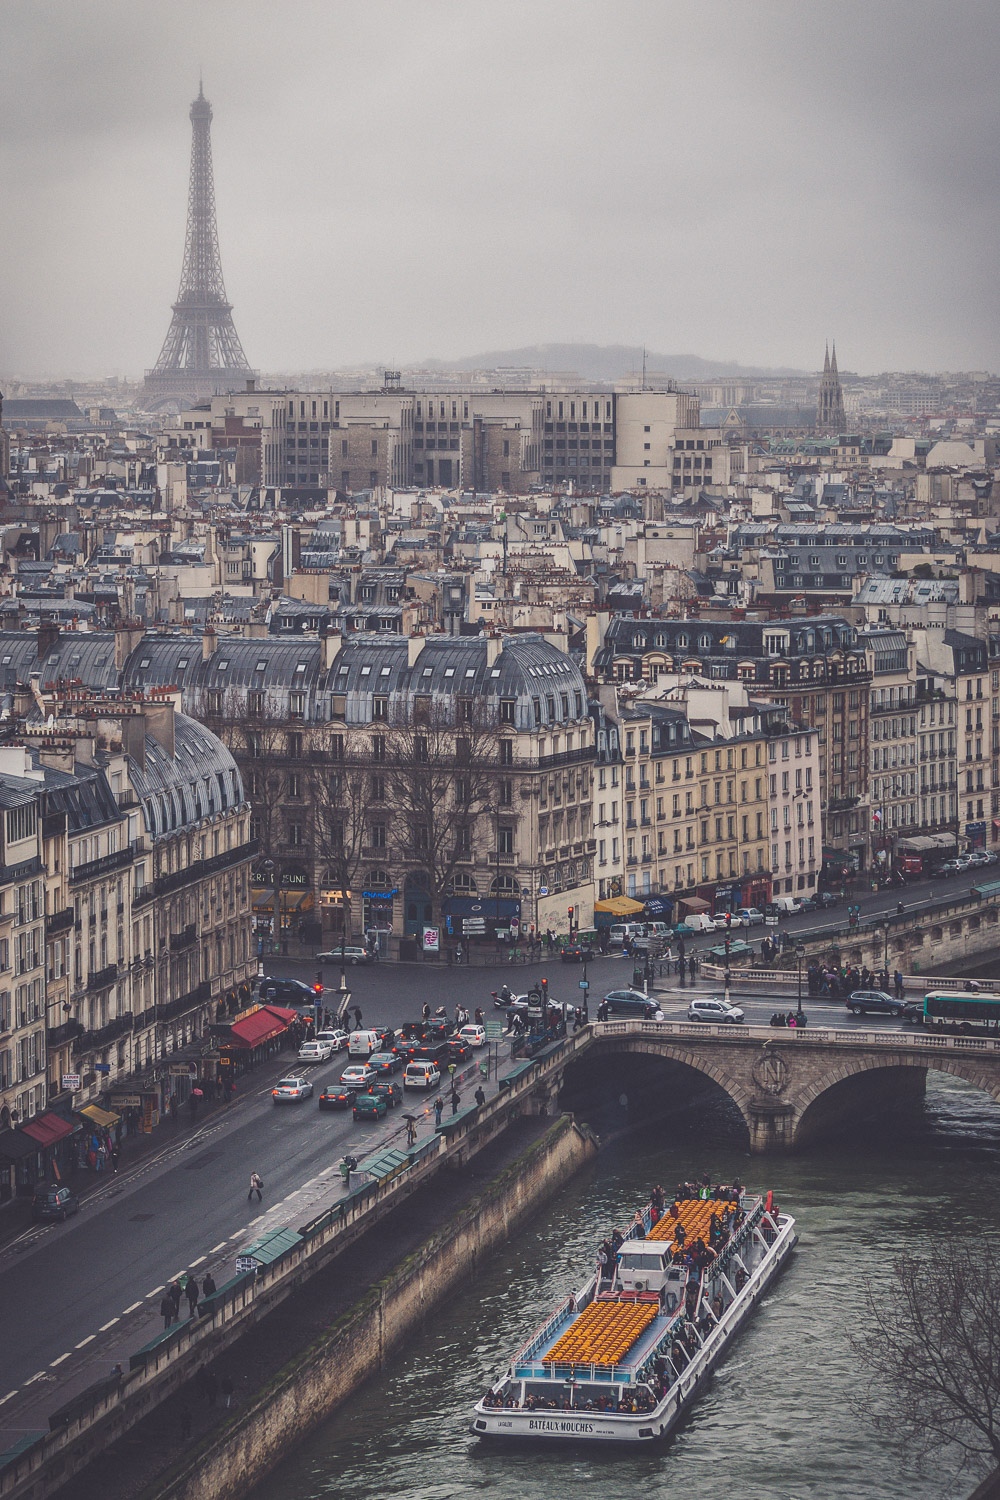 Misty Cruise - Boat, Europe, France, Notre Dame, Paris, Seine, Transport, rooftop, street, travel